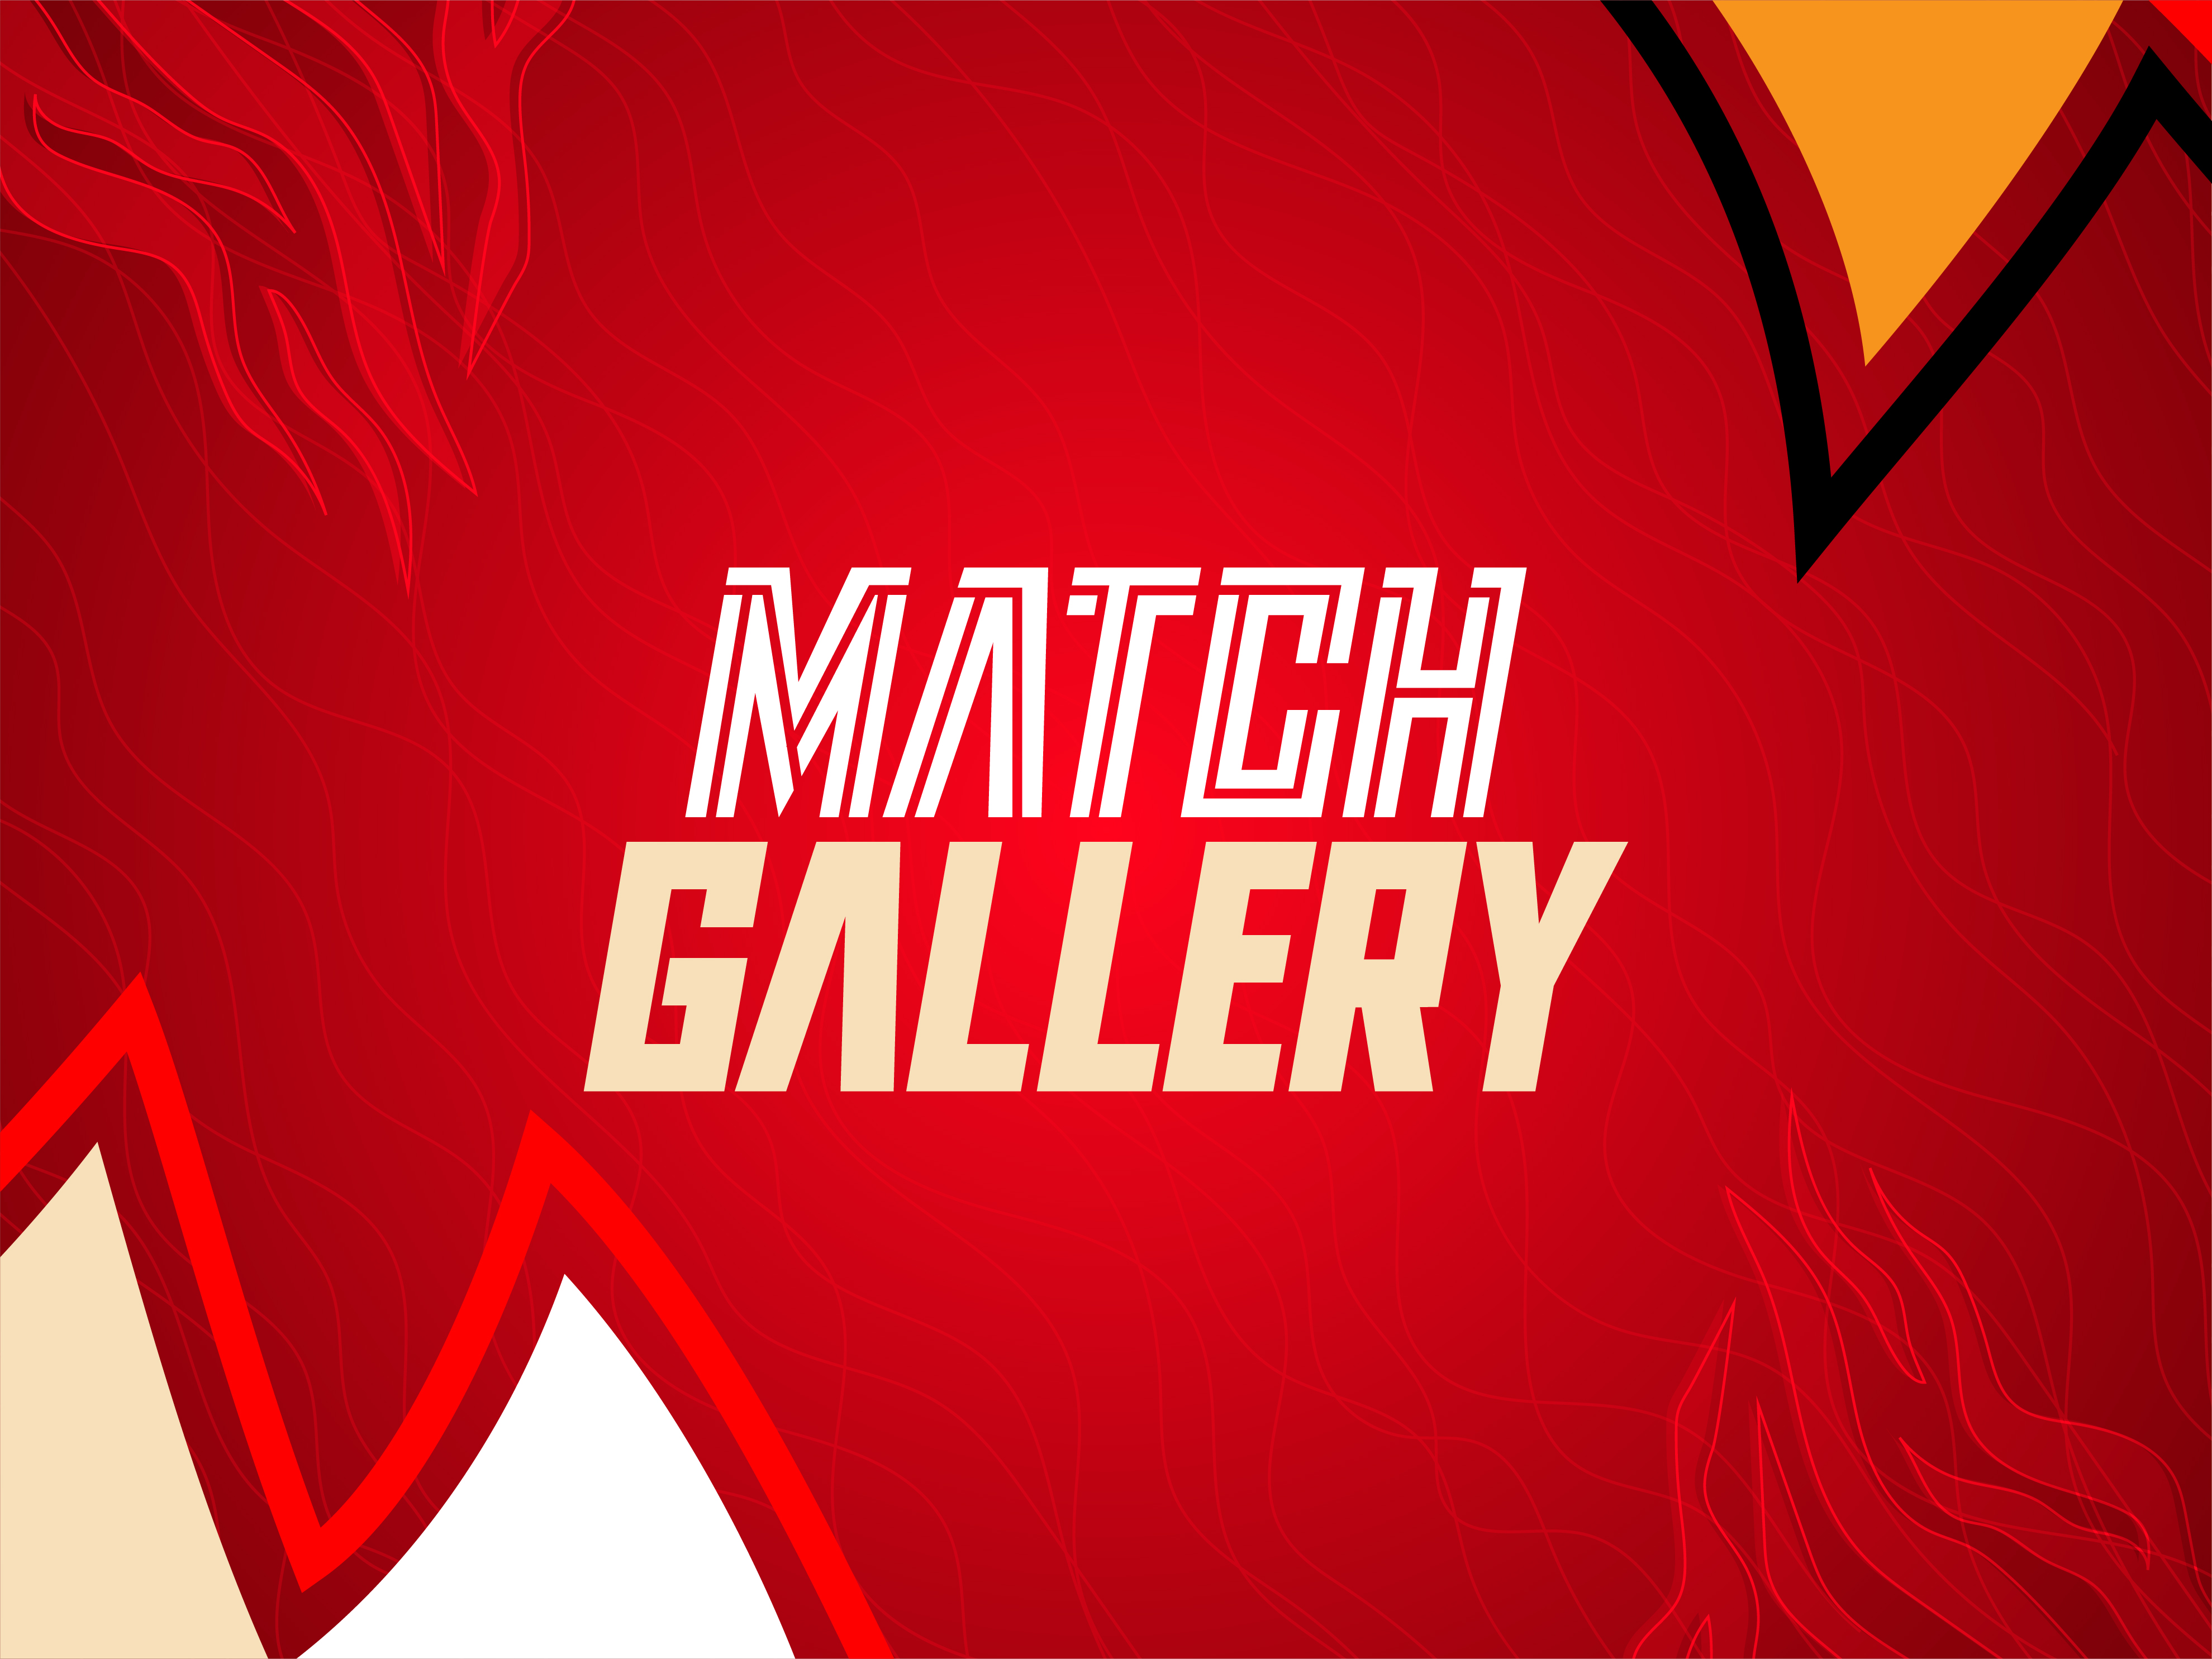 Match Gallery